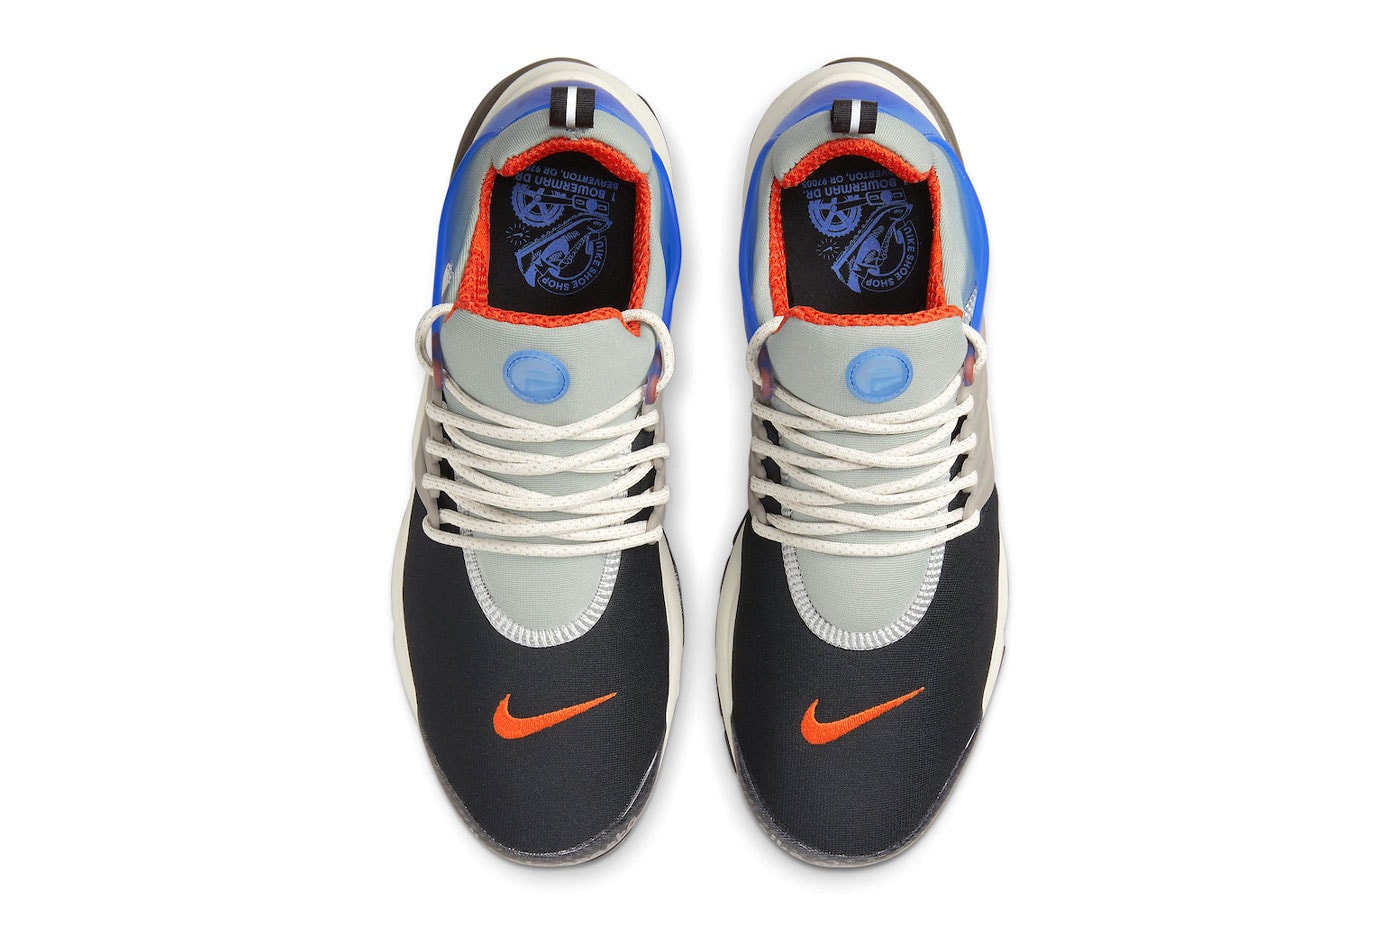 Nike Air Presto shoe shop official look summer 2022 black team orange dusty sage racer blue 130 usd release info date price